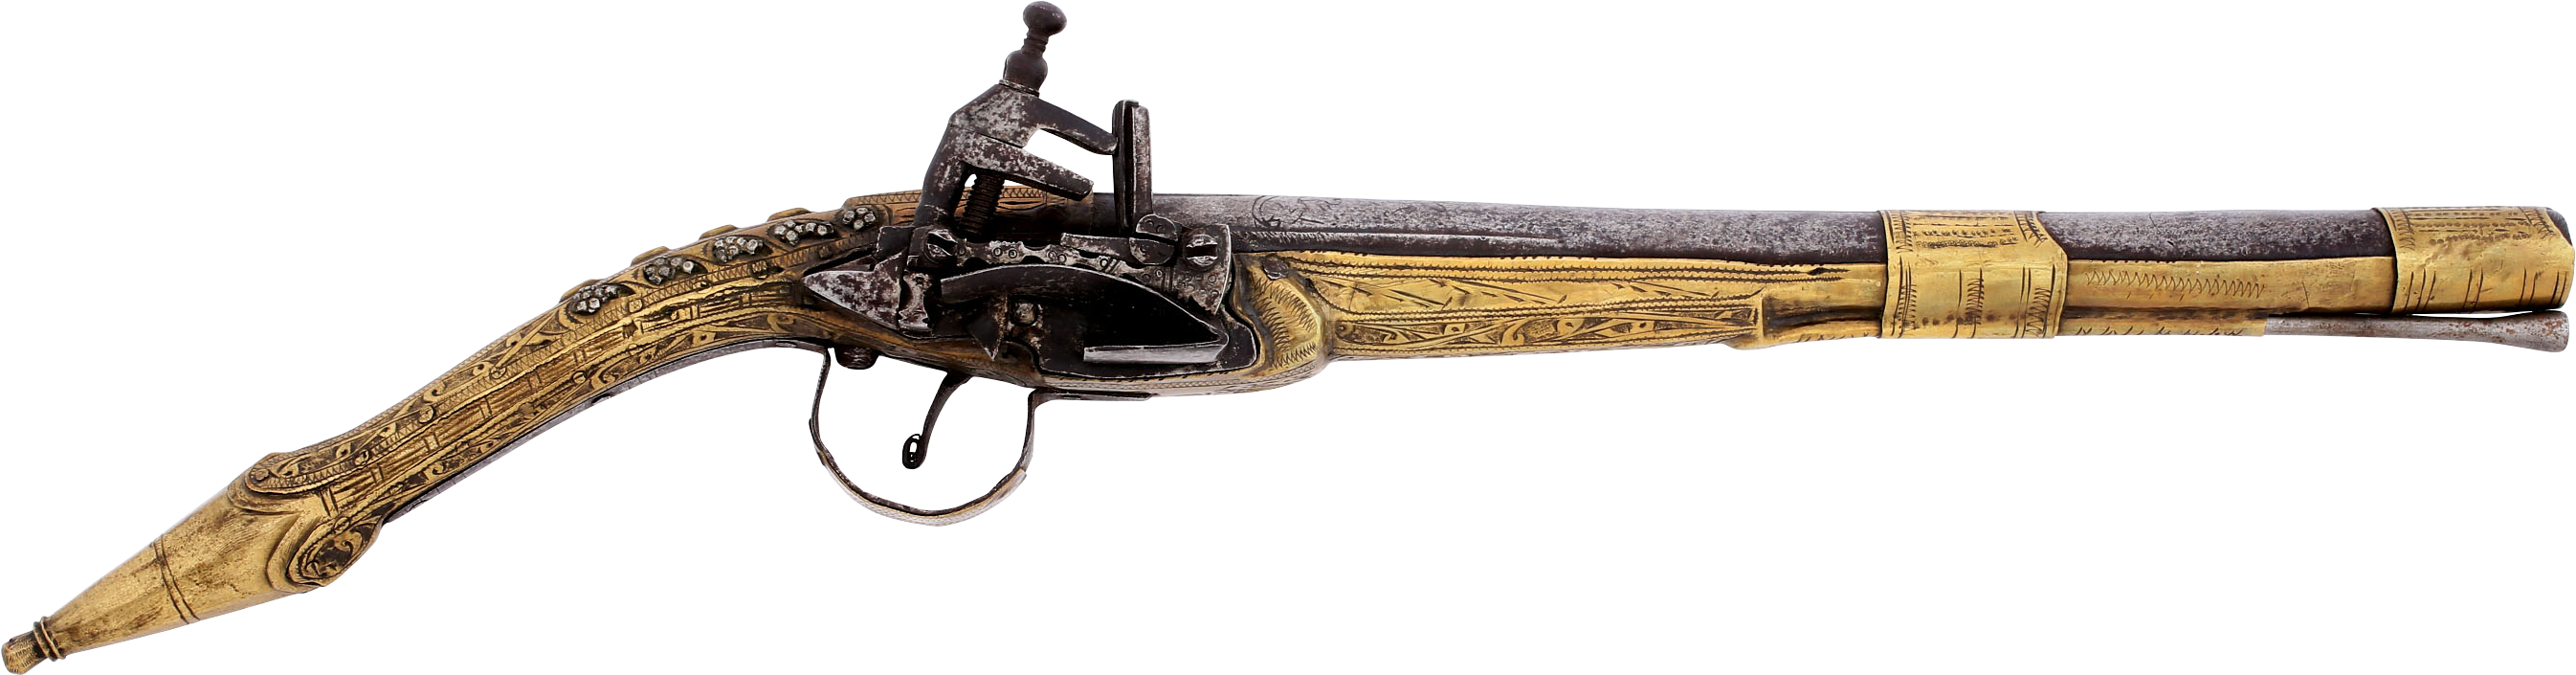 GOOD ALBANIAN (OTTOMAN) MIQUELET PISTOL, C.1800-EARLY 19th CENTURY - Fagan Arms